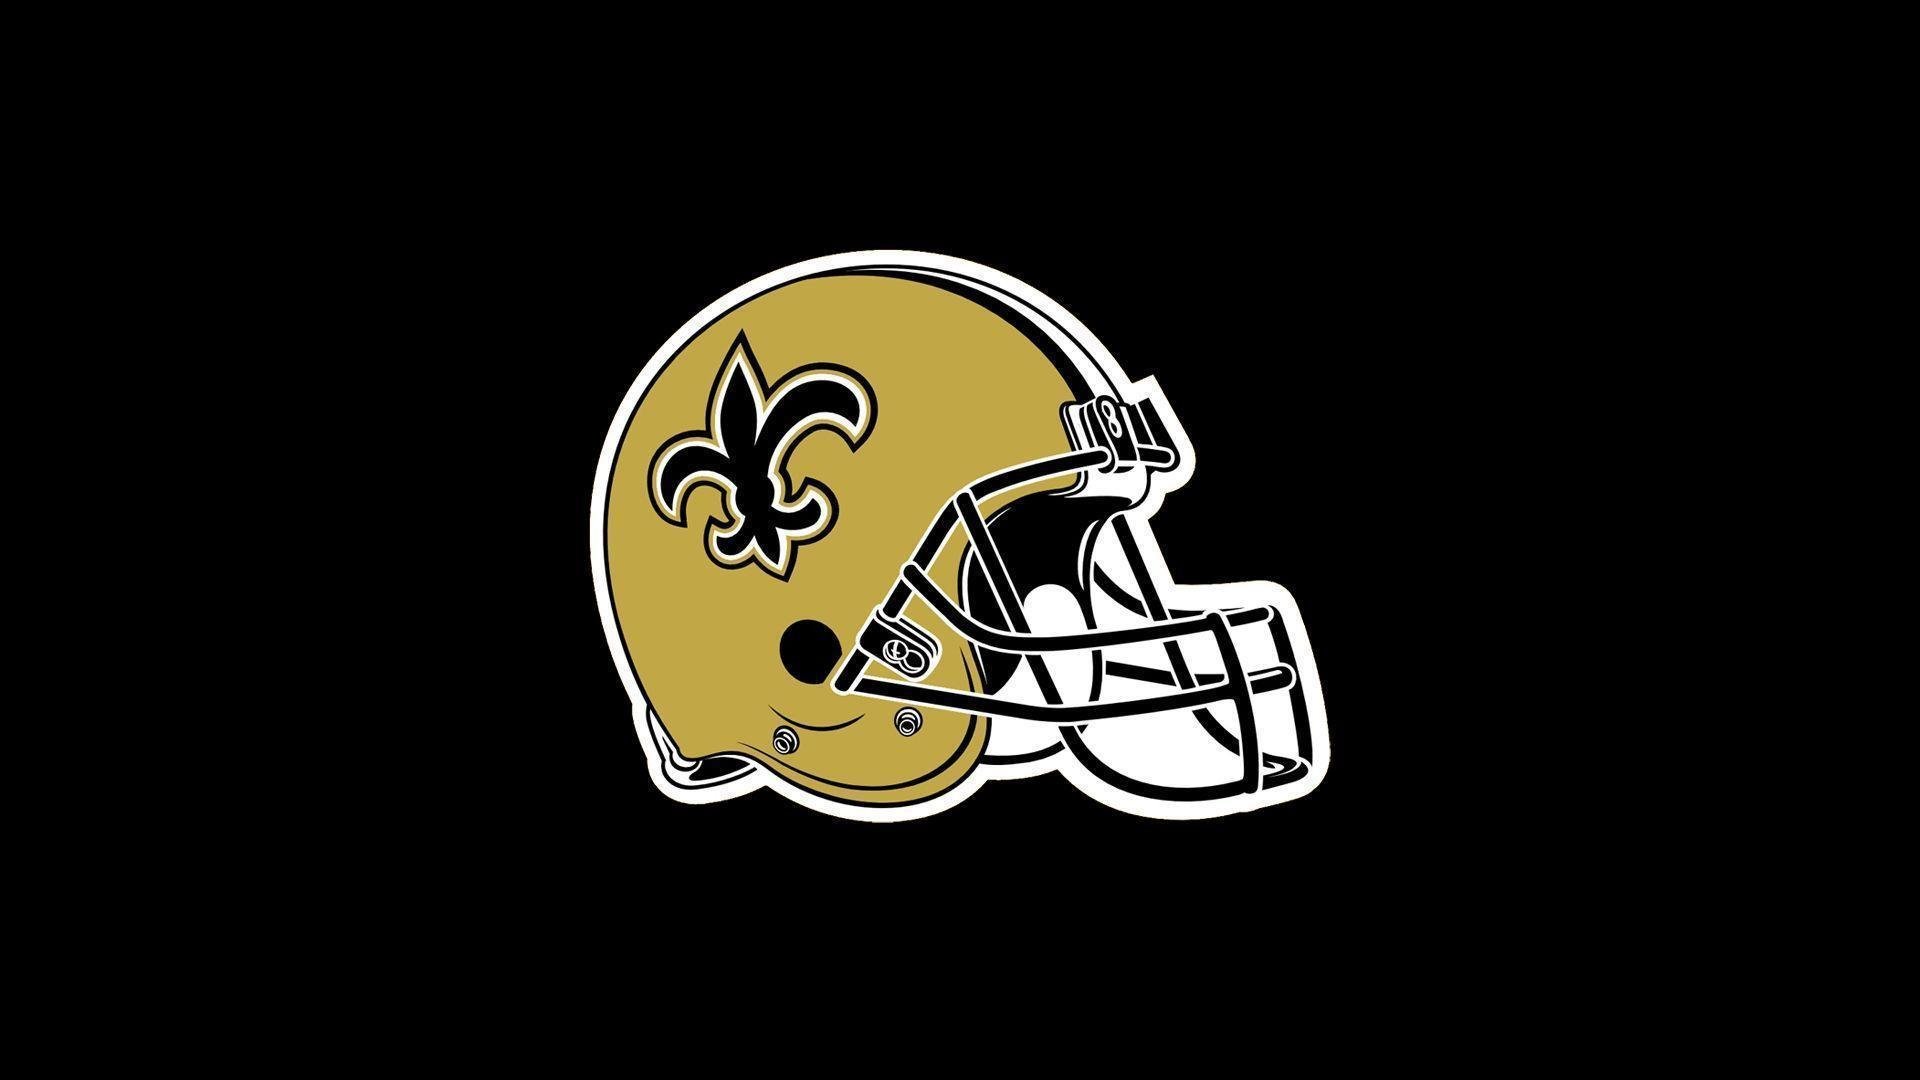 NFL New Orleans Saints Helmet Wallpaper. All Best Image